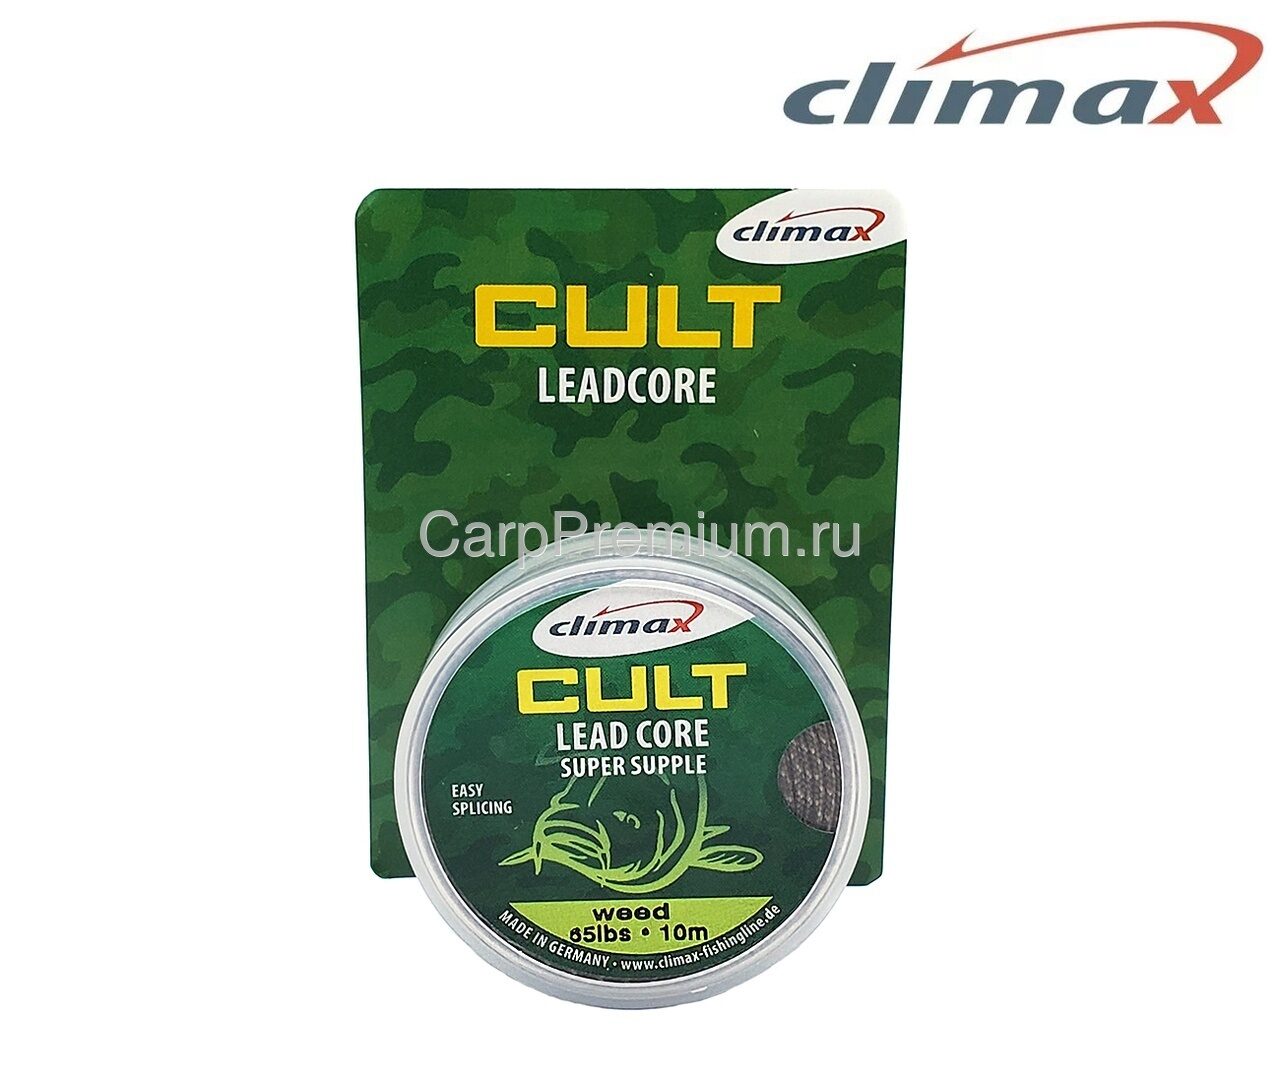 Лидкор со свинцовым стержнем Зеленый Сlimax (Клаймакс) - Leadcore-Super Supple Weed 30 кг / 65 lb, 10 м